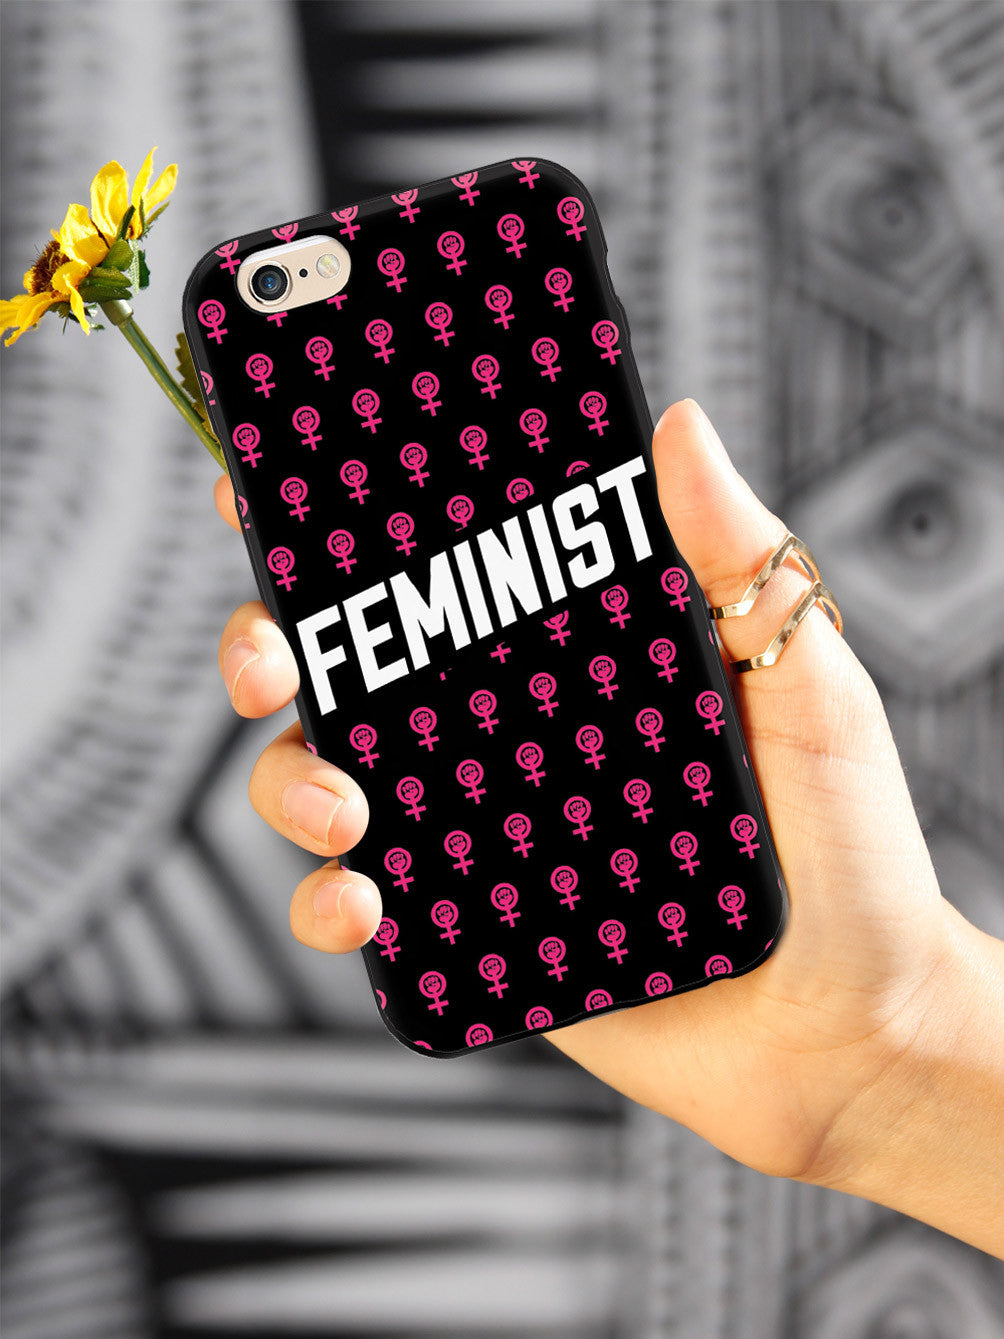 Pink Feminist Pattern - Black Case